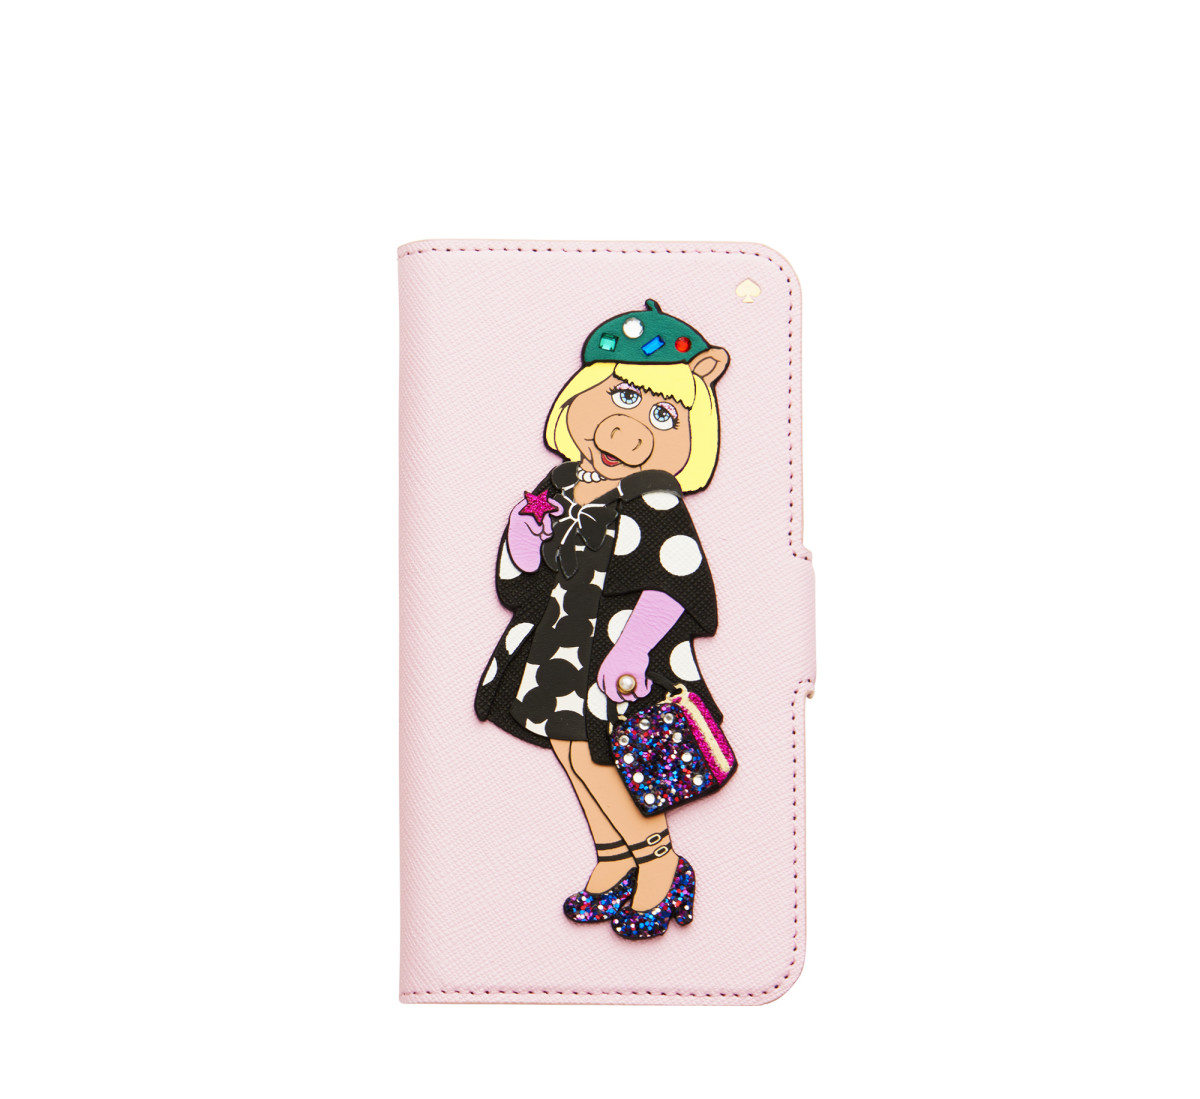 The Kate Spade New York x Miss Piggy phone case. Photo: Courtesy